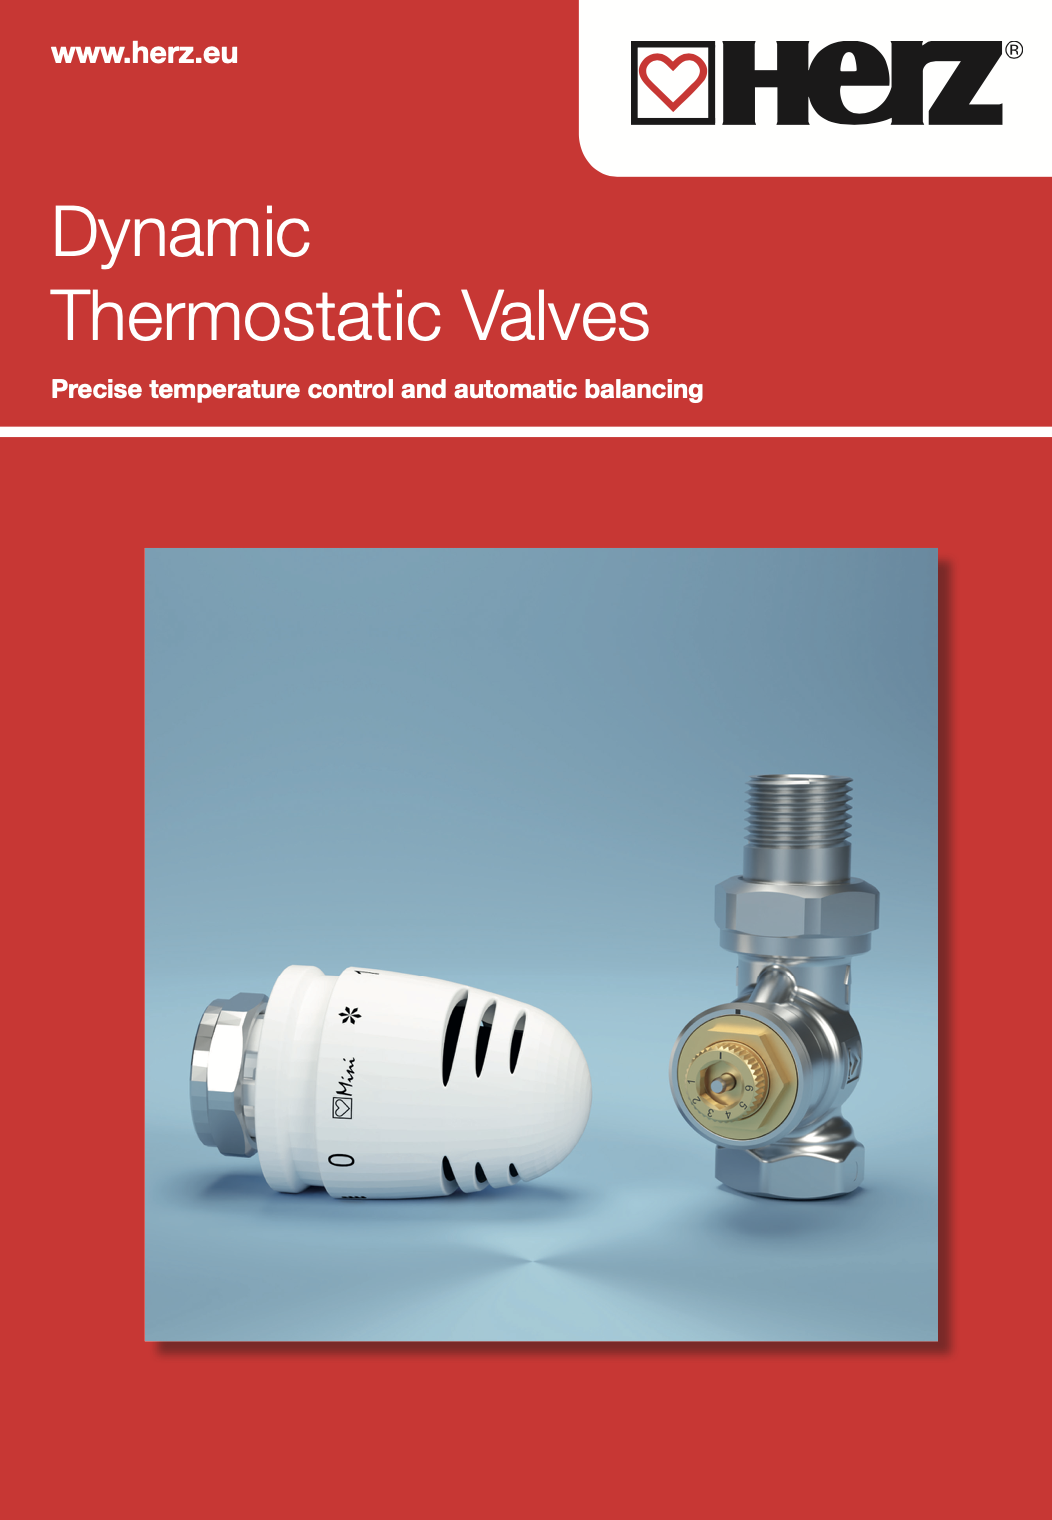 Dynamic thermostatic valves